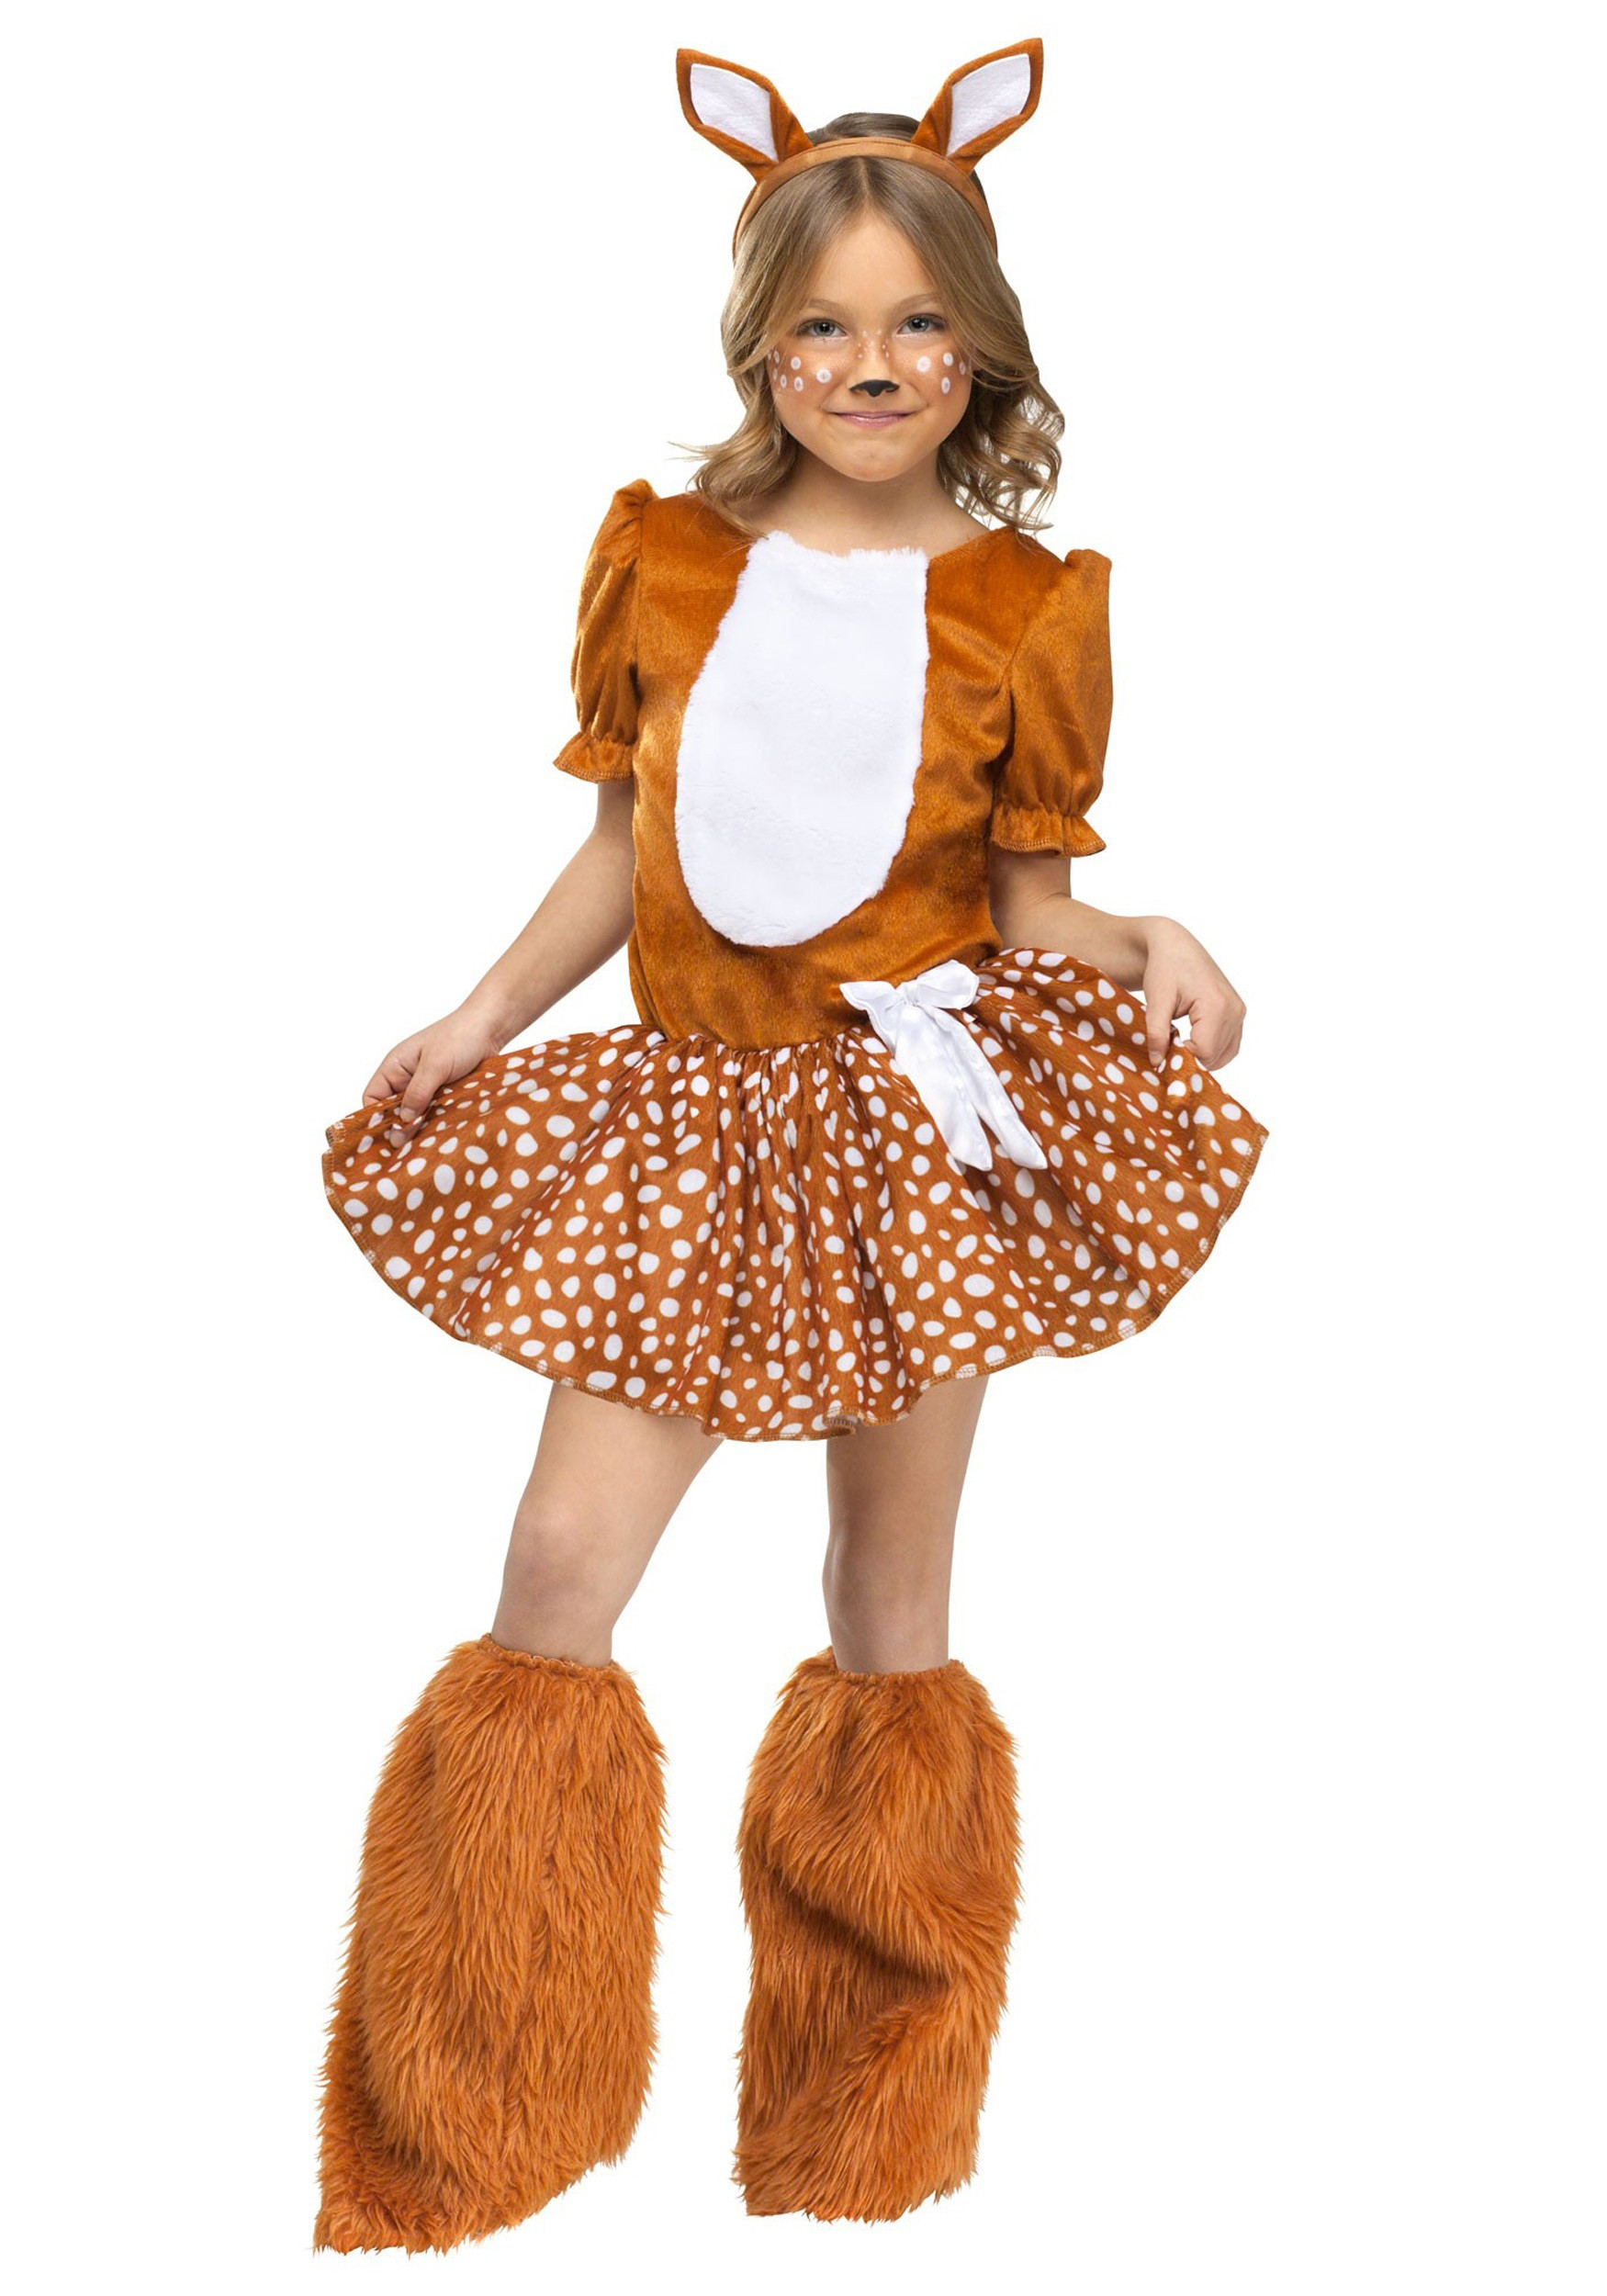 Toddler Deer Costume DIY
 Deer Costume